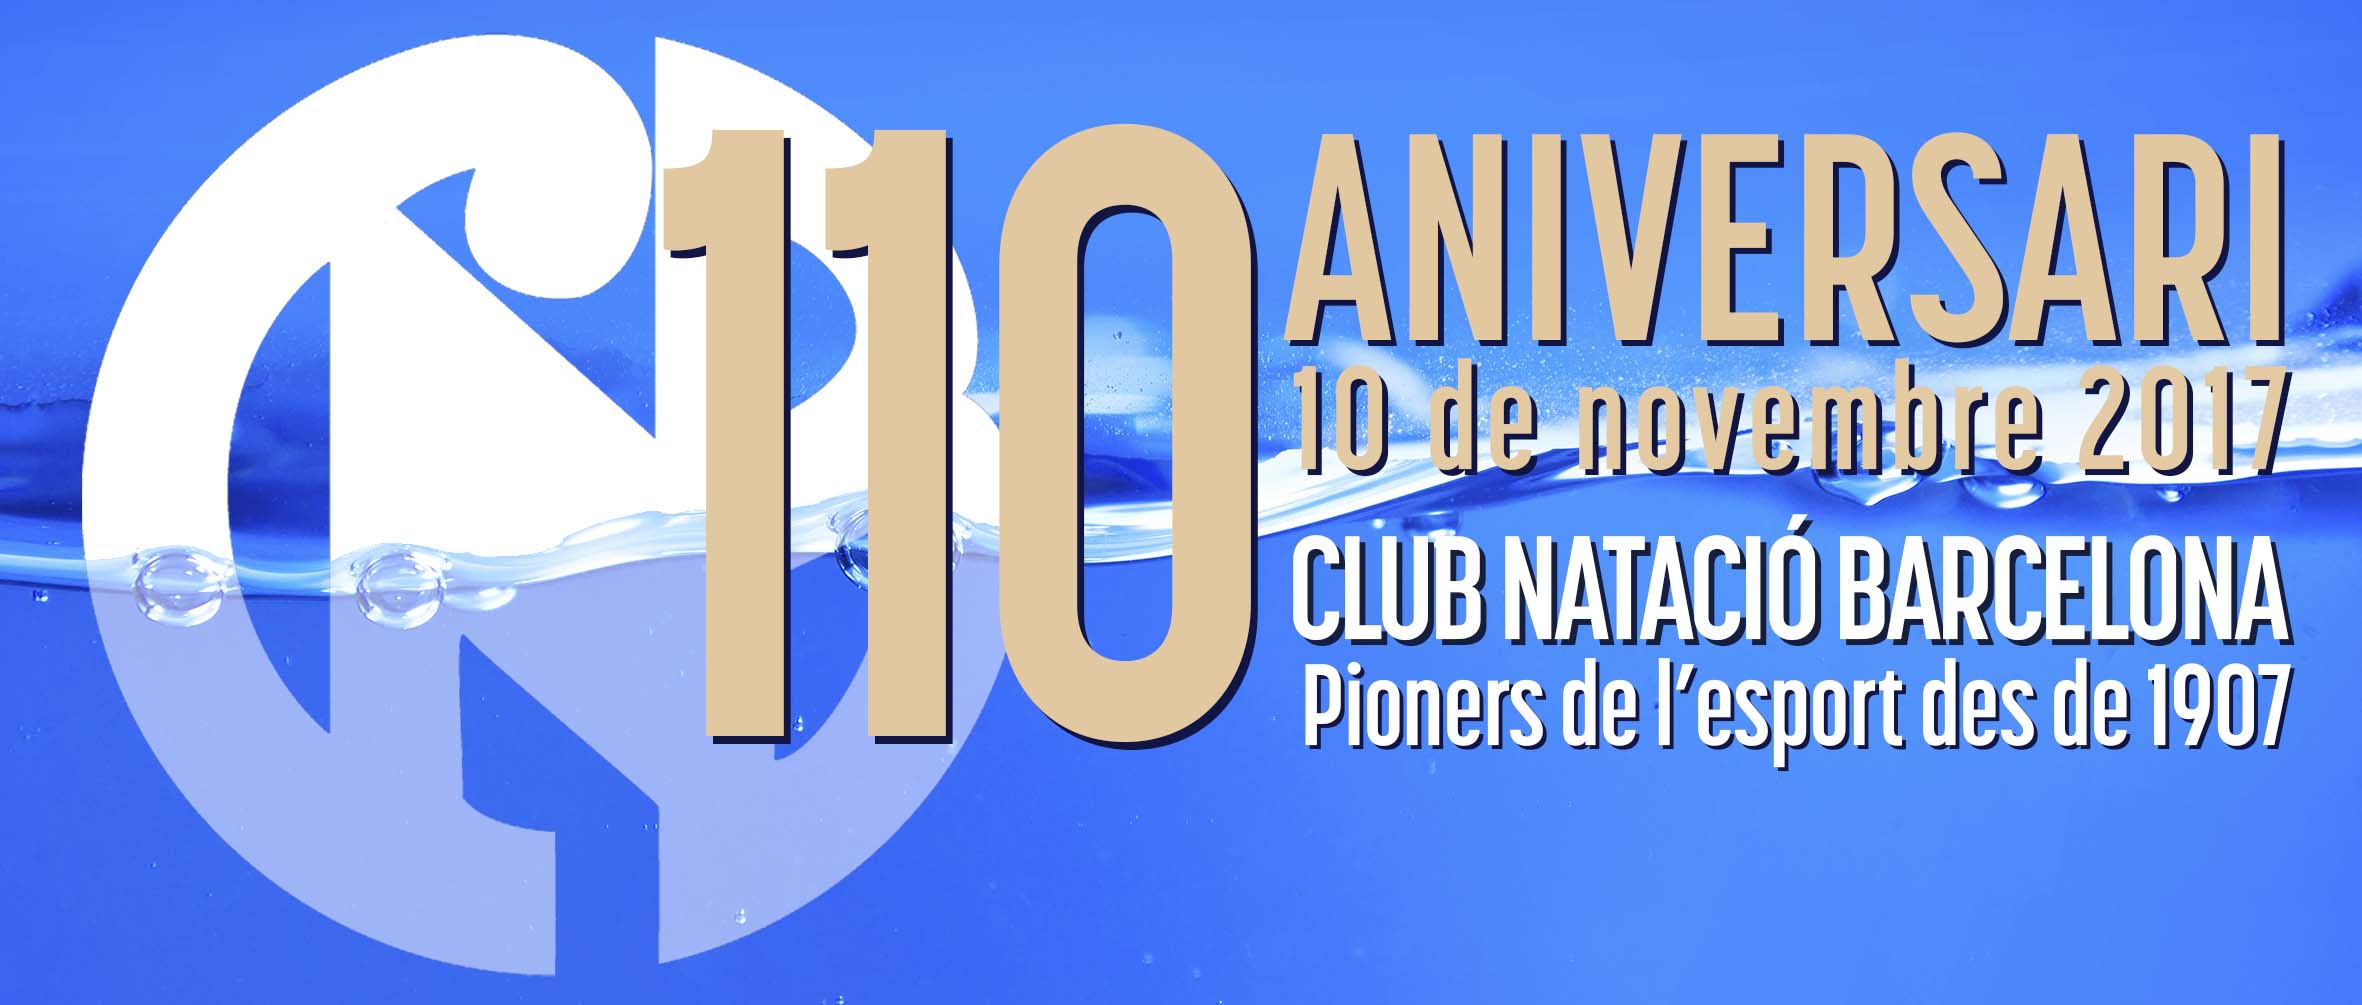 110 aniversari club natacio barcelona